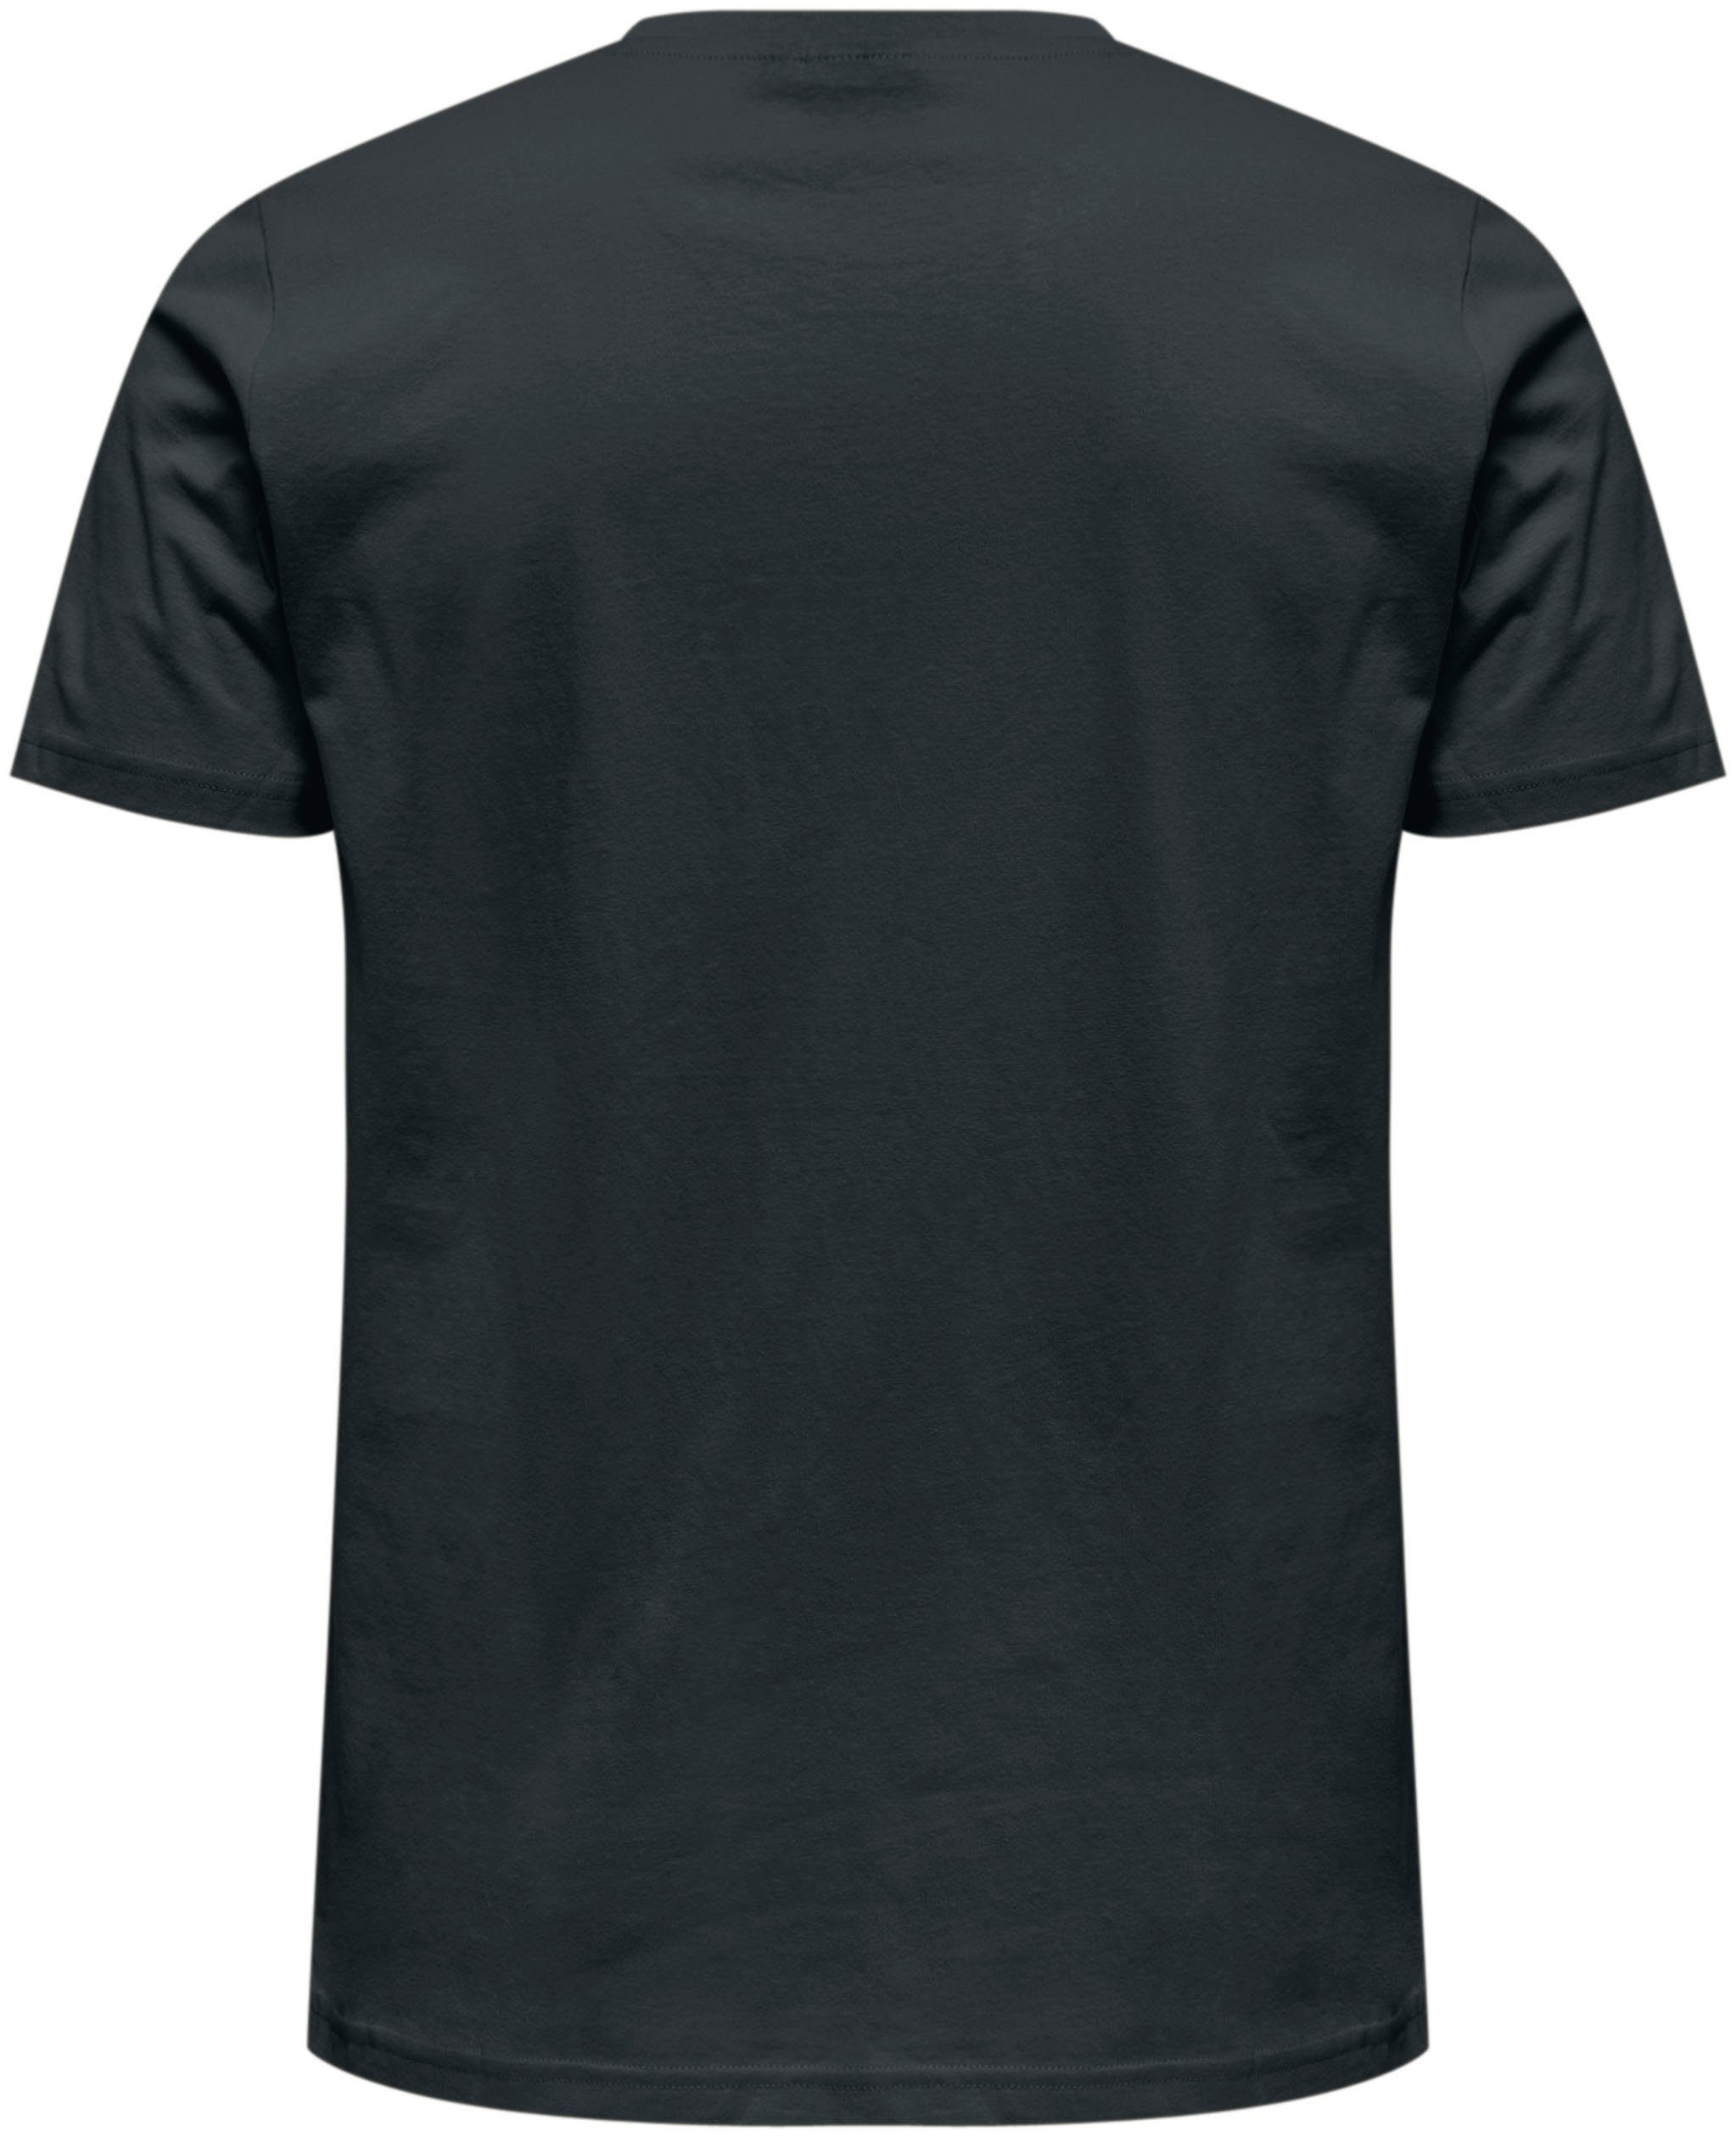 T-Shirt schwarz mit hummel Print Logo